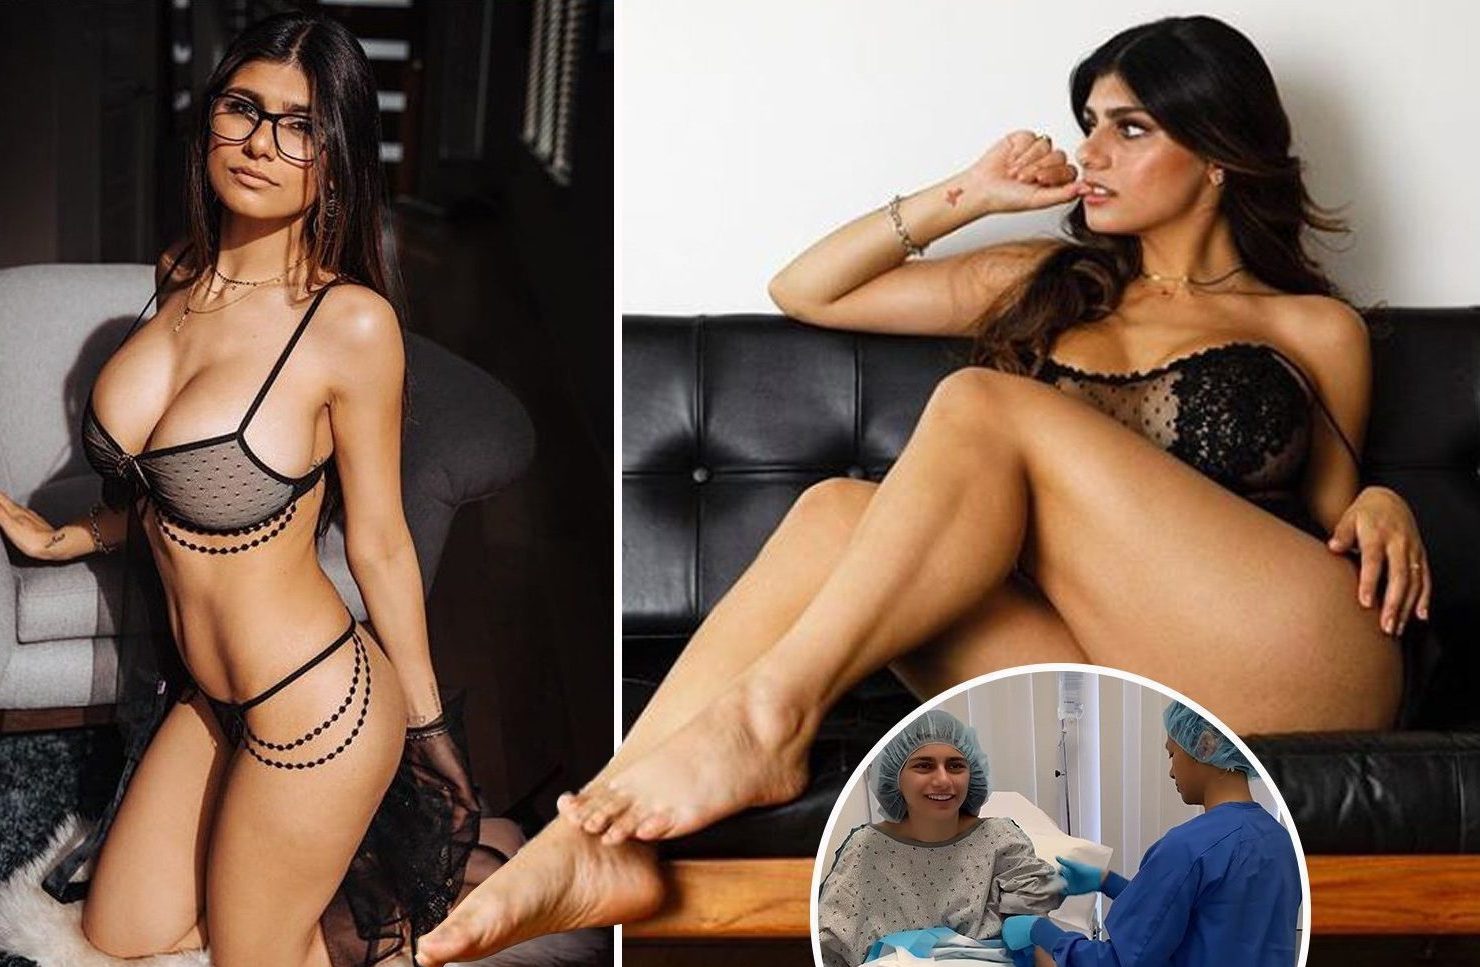 april layman recommends mia khalifa new boobs pic